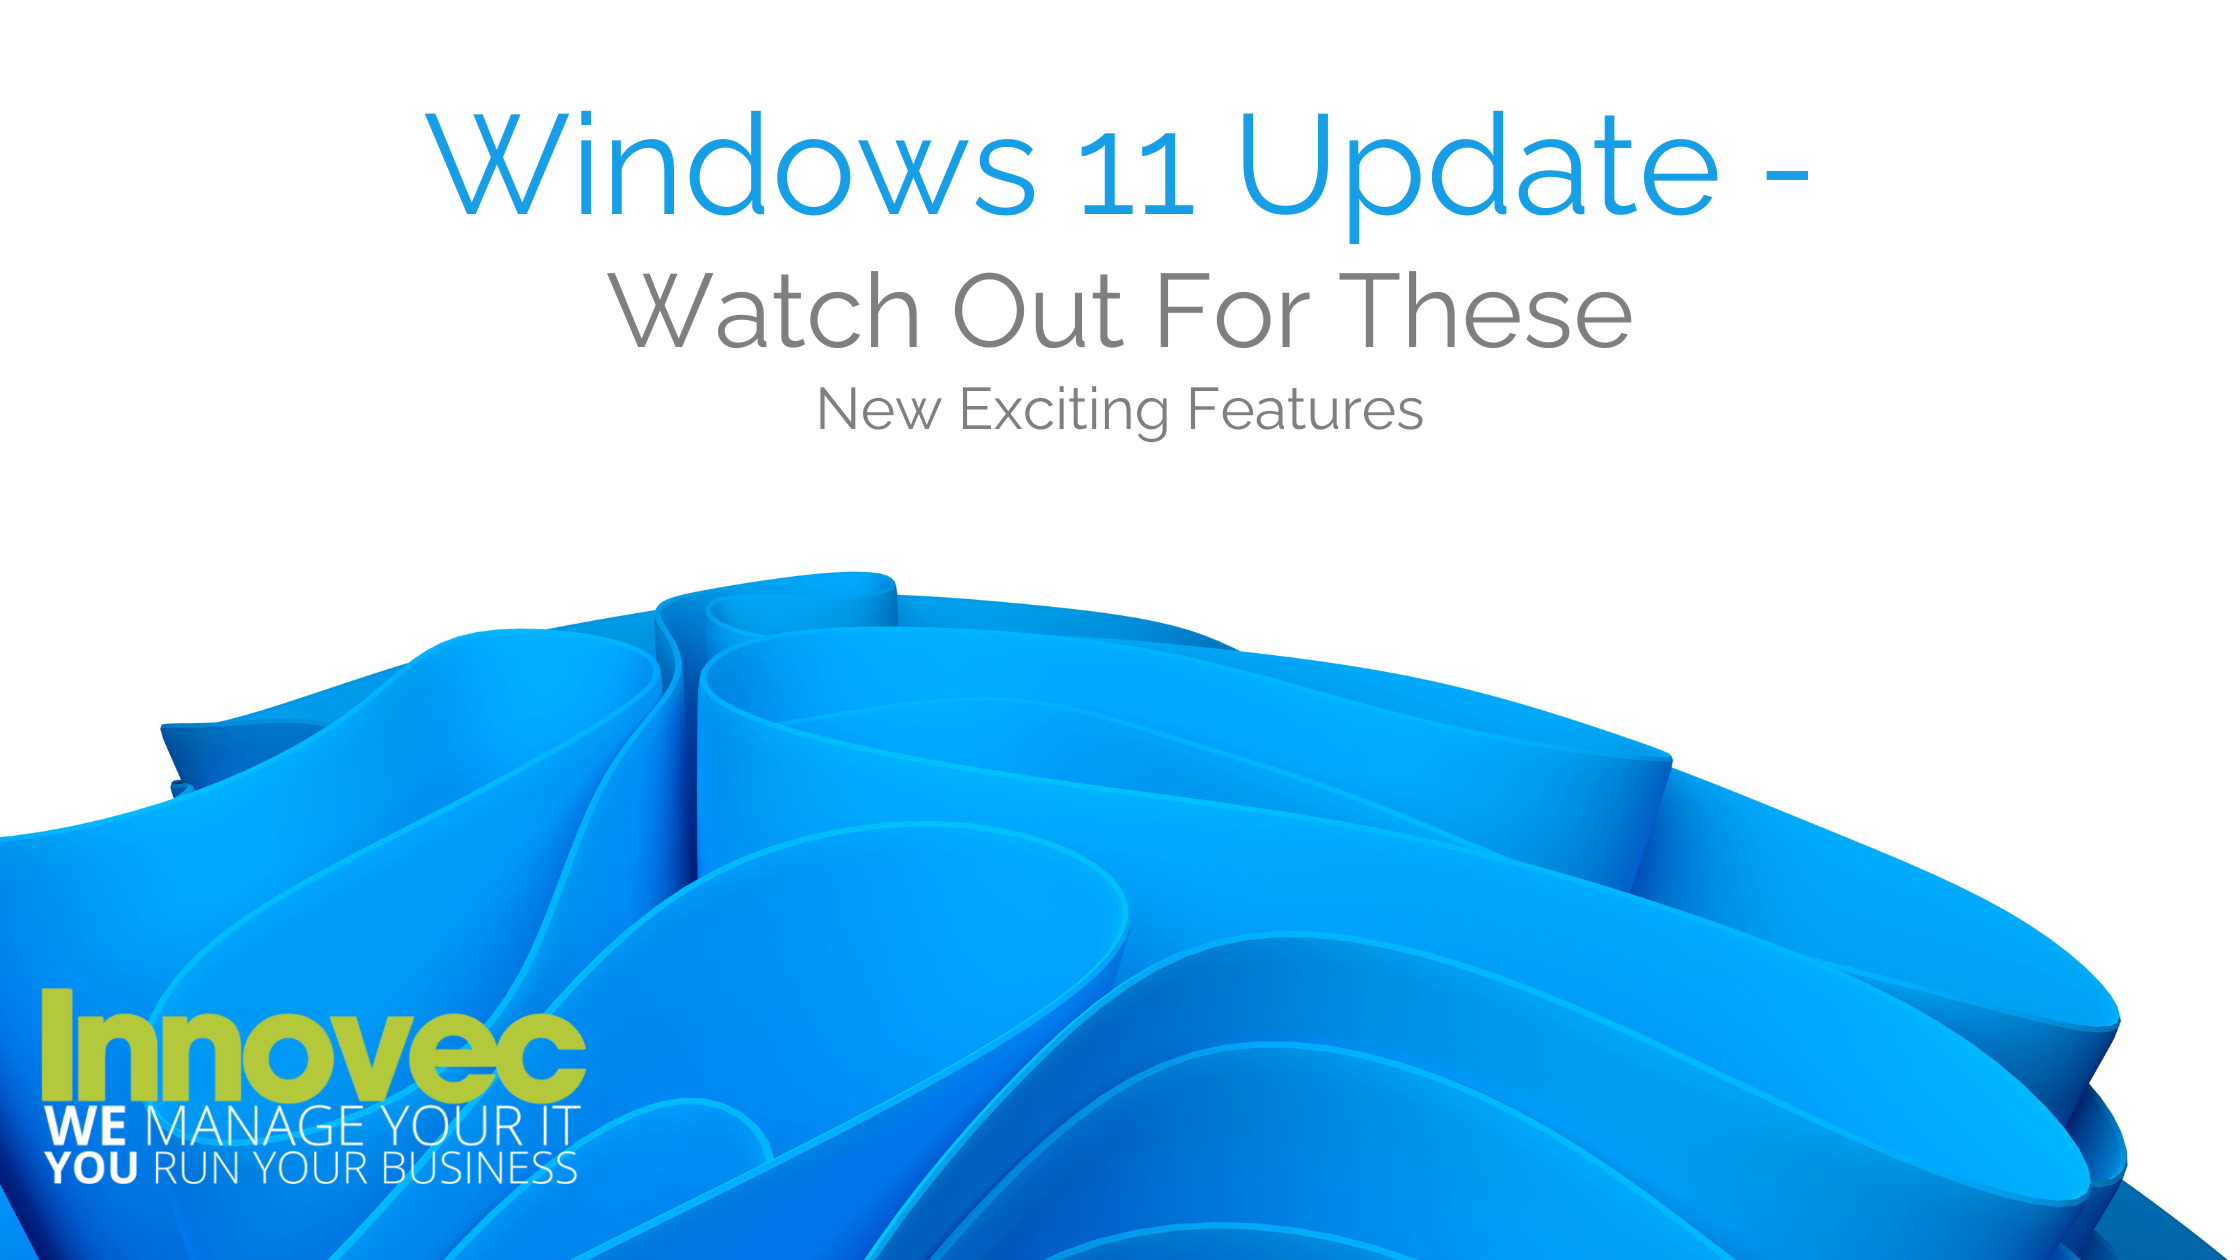 Windows 11 Update - New Features